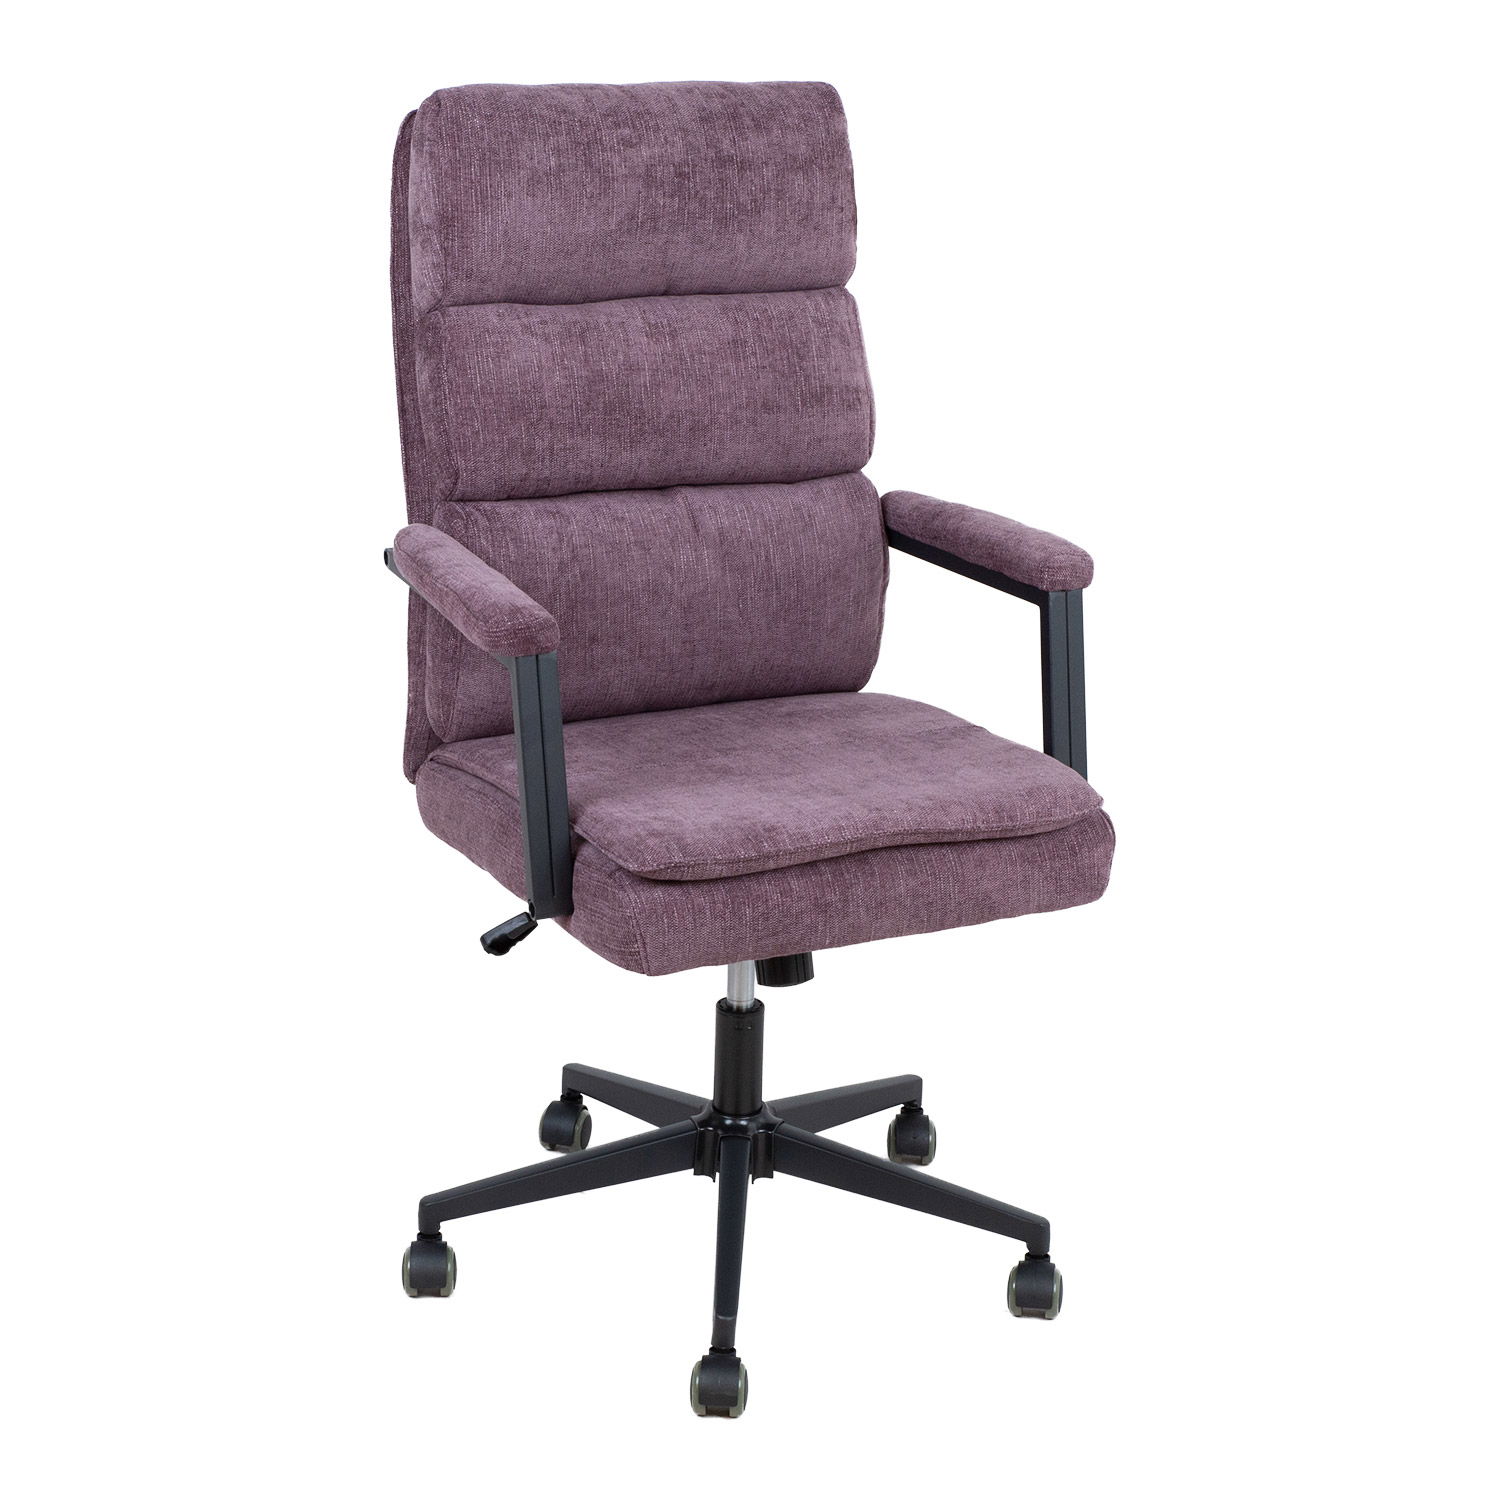 Biuro kėdė REMY, 65x72x108-115 cm, violetinė - 1